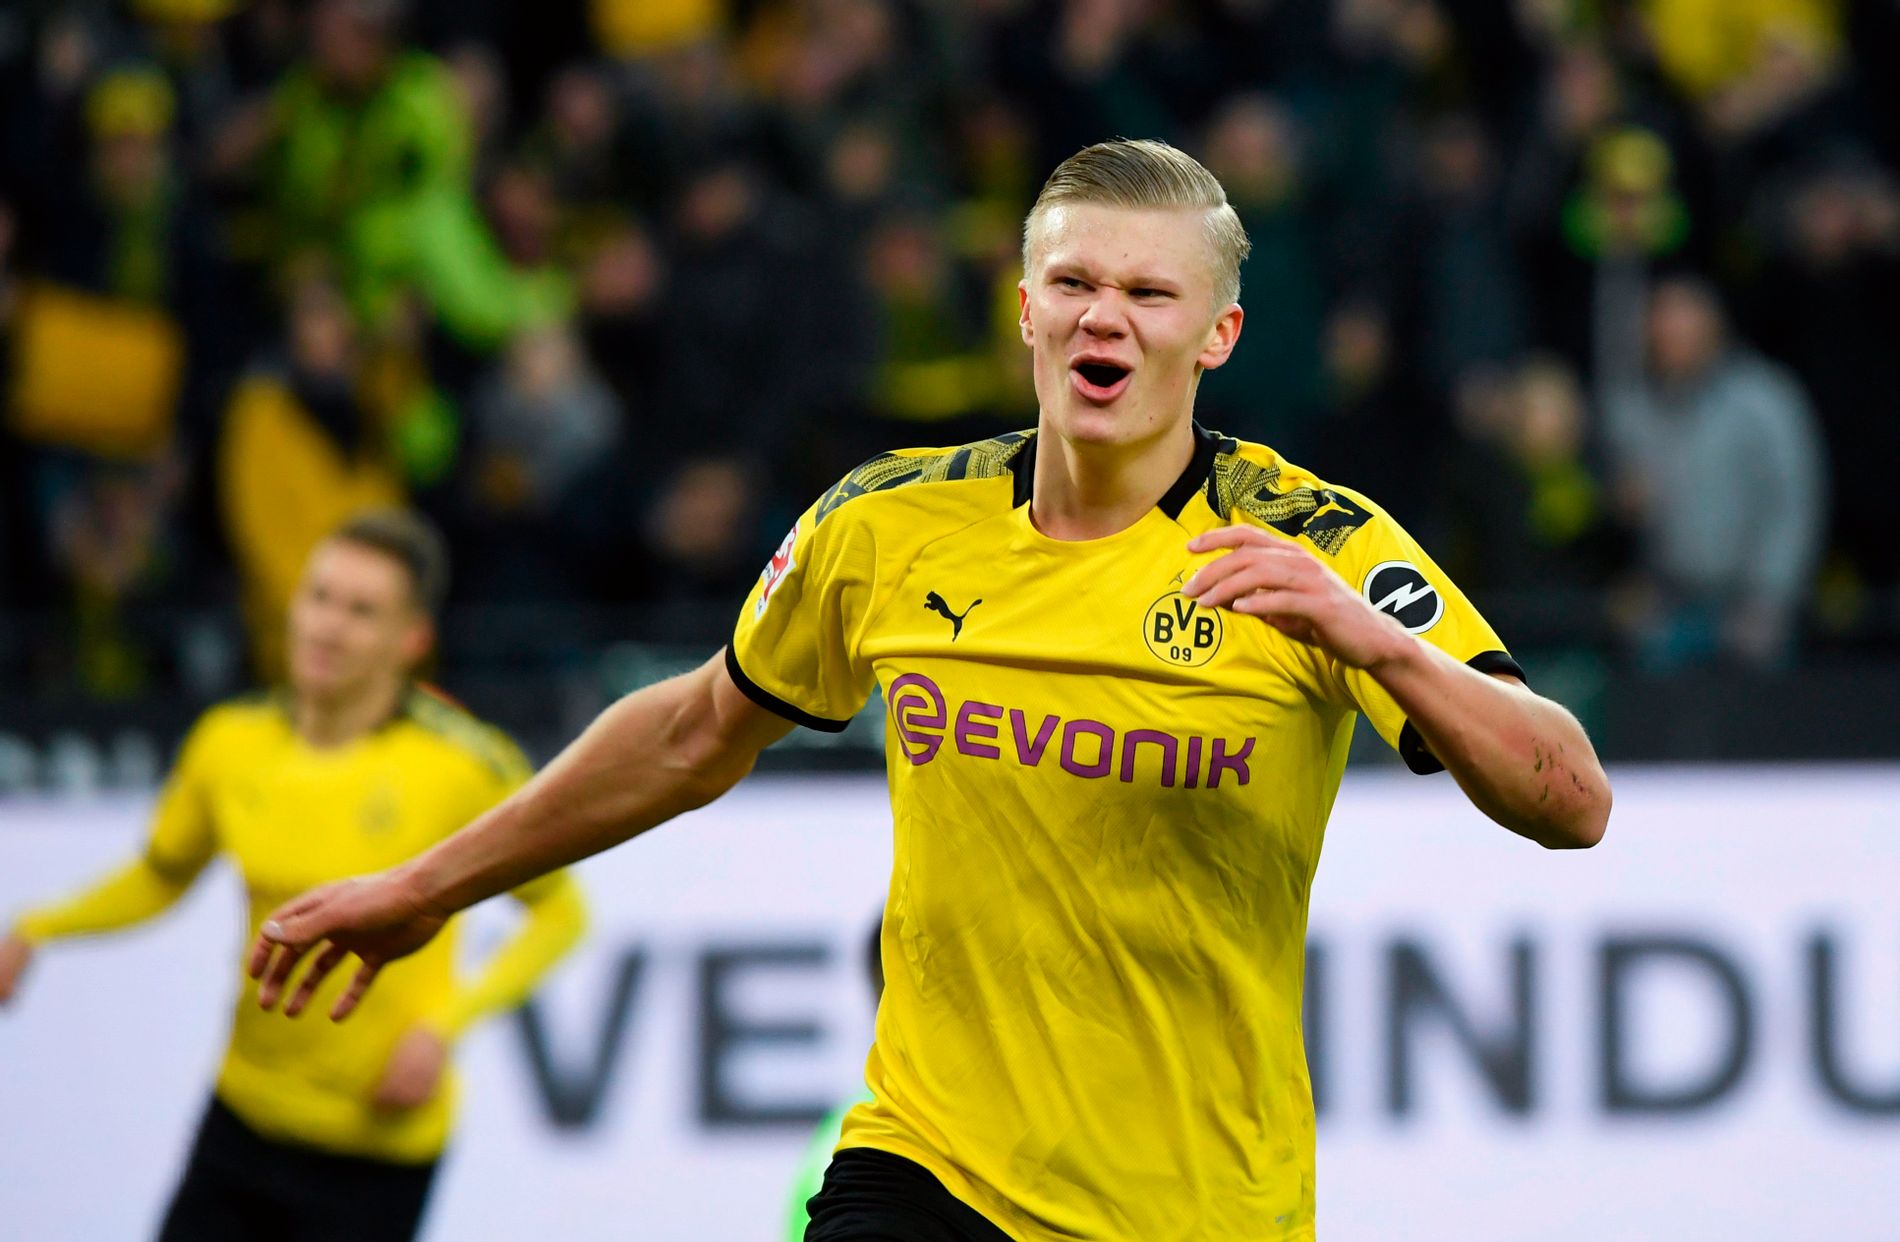 2. Erling Braut Haaland (Borussia Dortmund): 12 bàn thắng